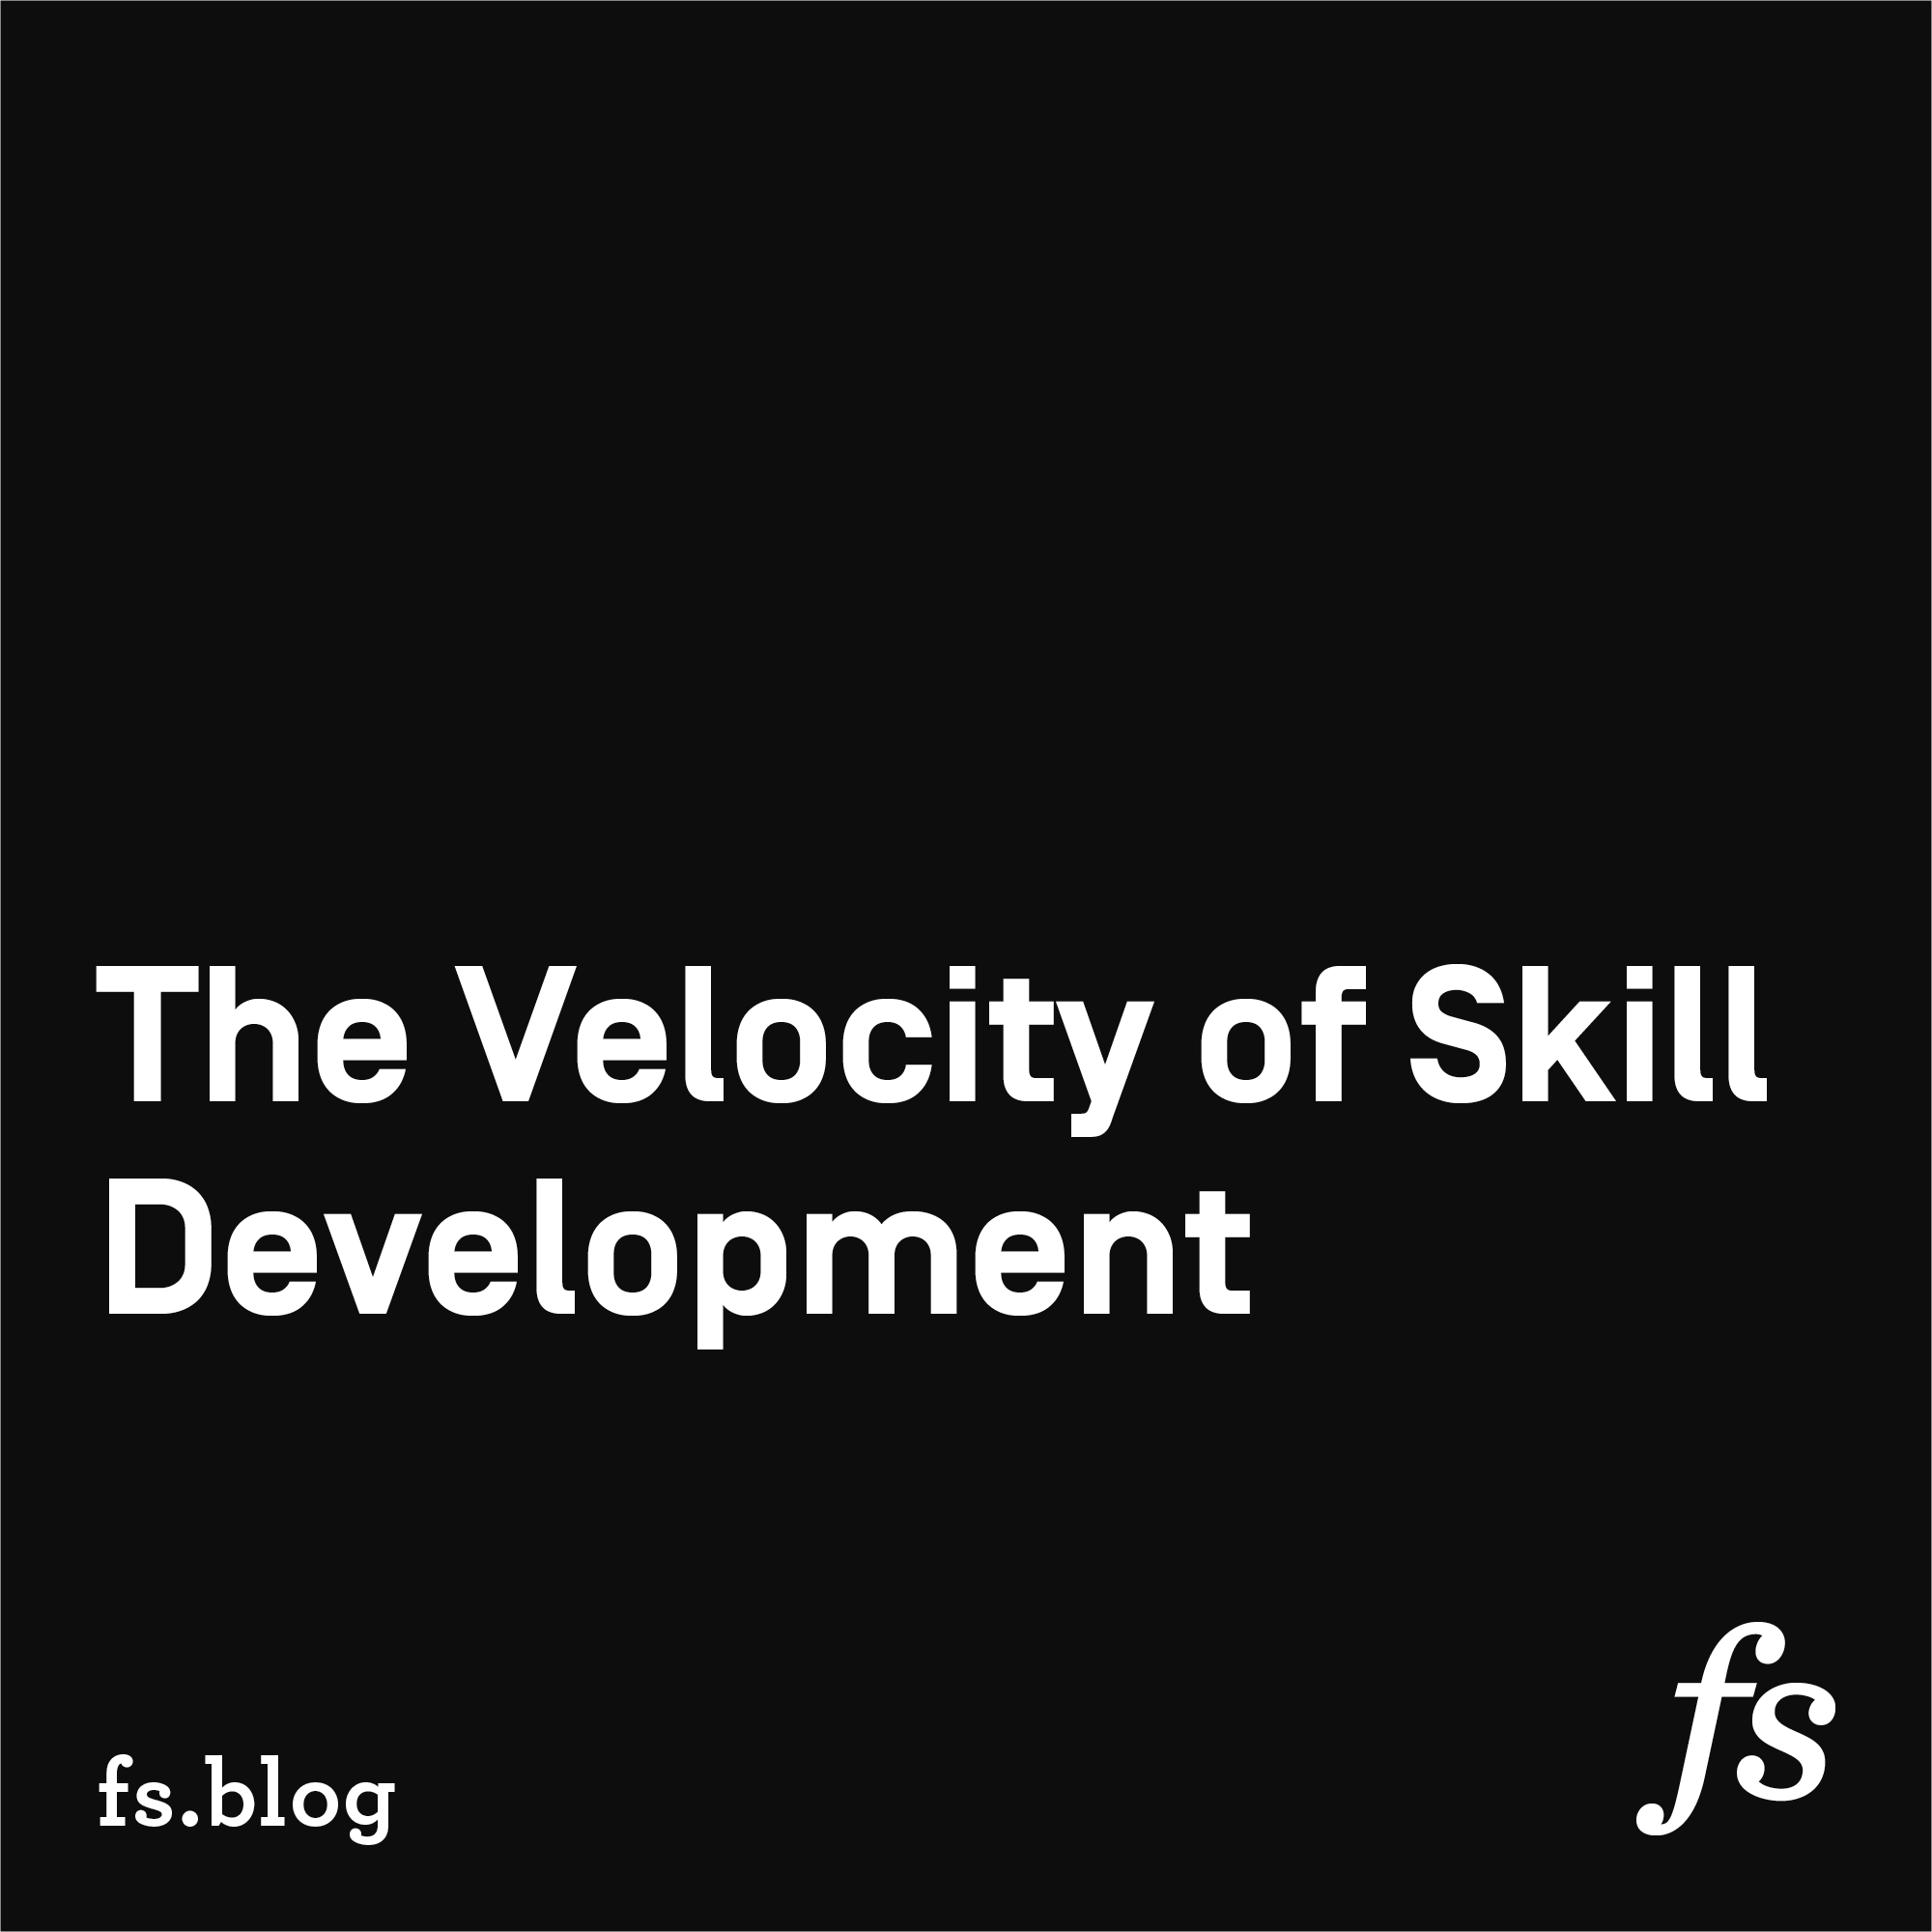 The Velocity of Skill Development